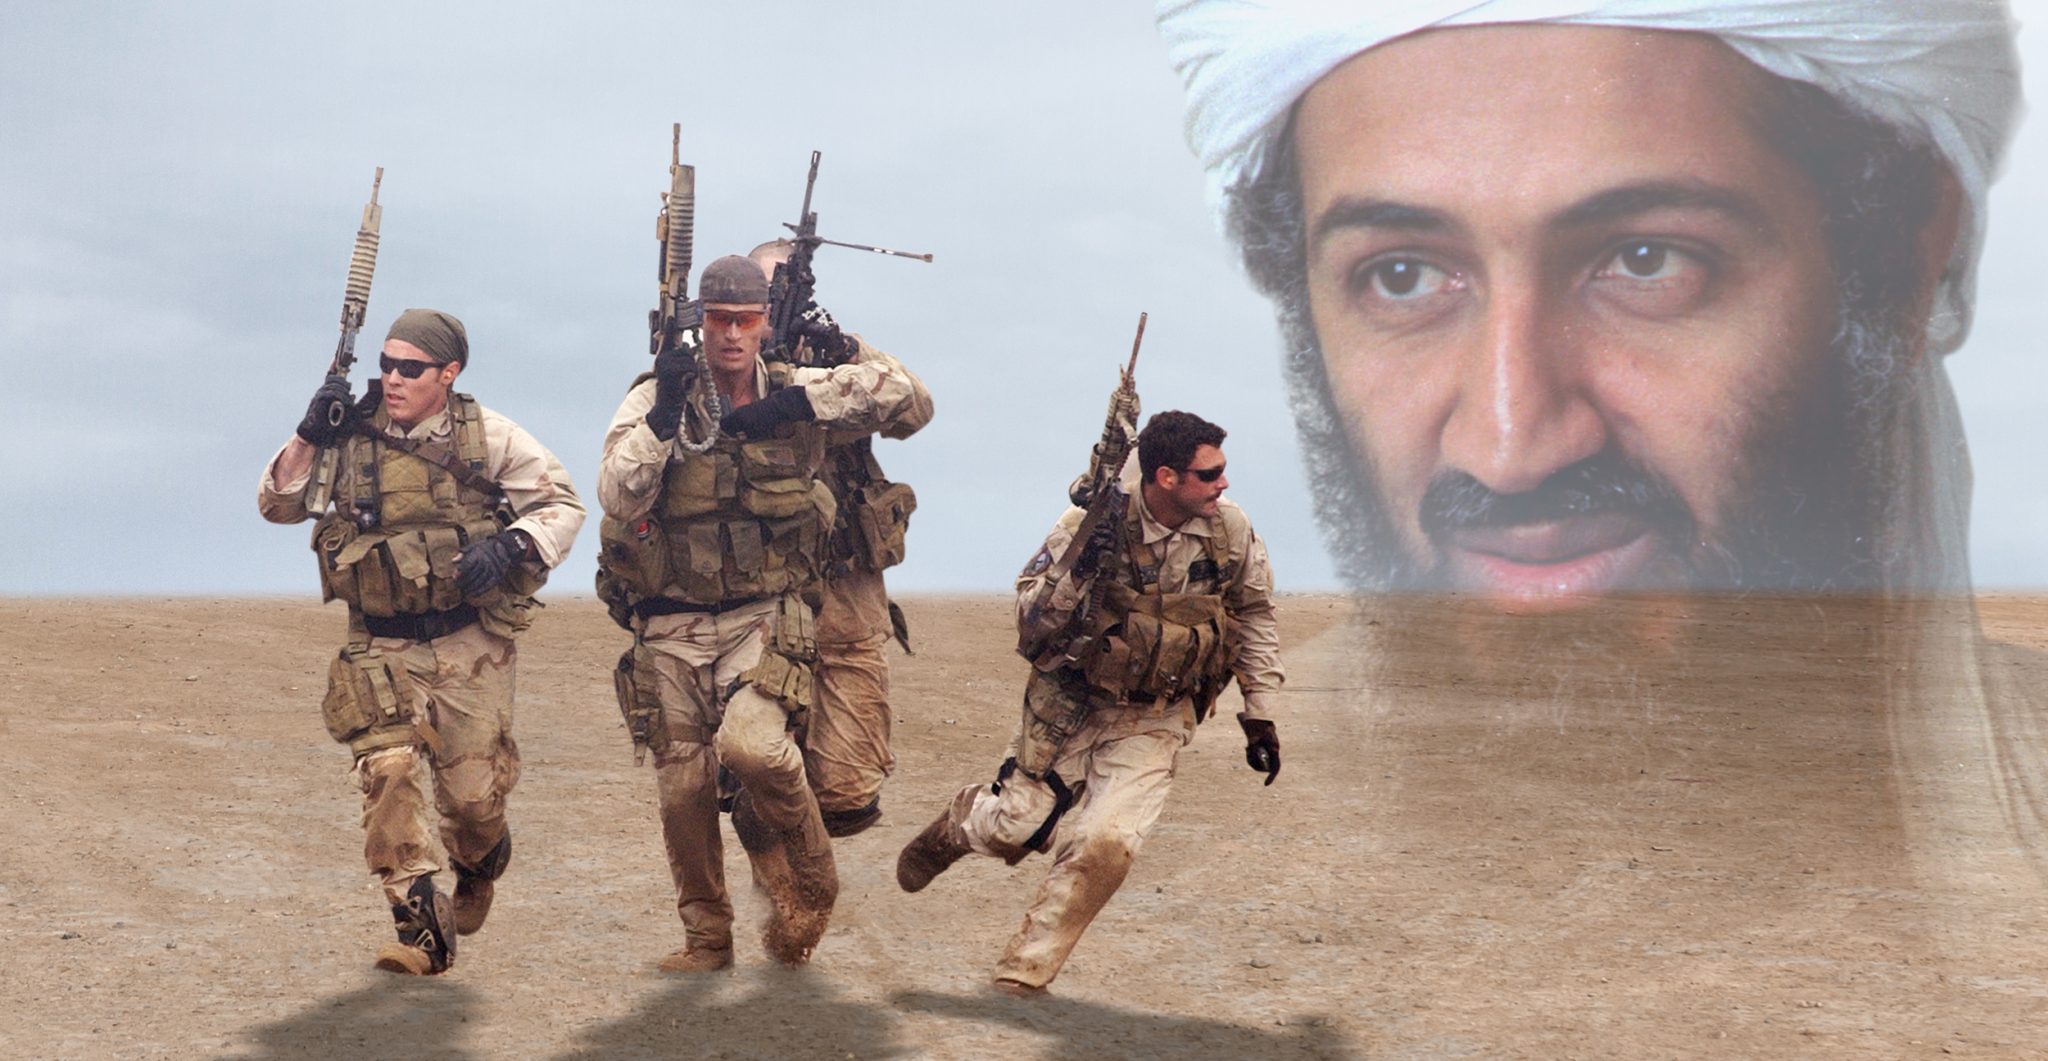 Photo of bin Laden: Getty Images